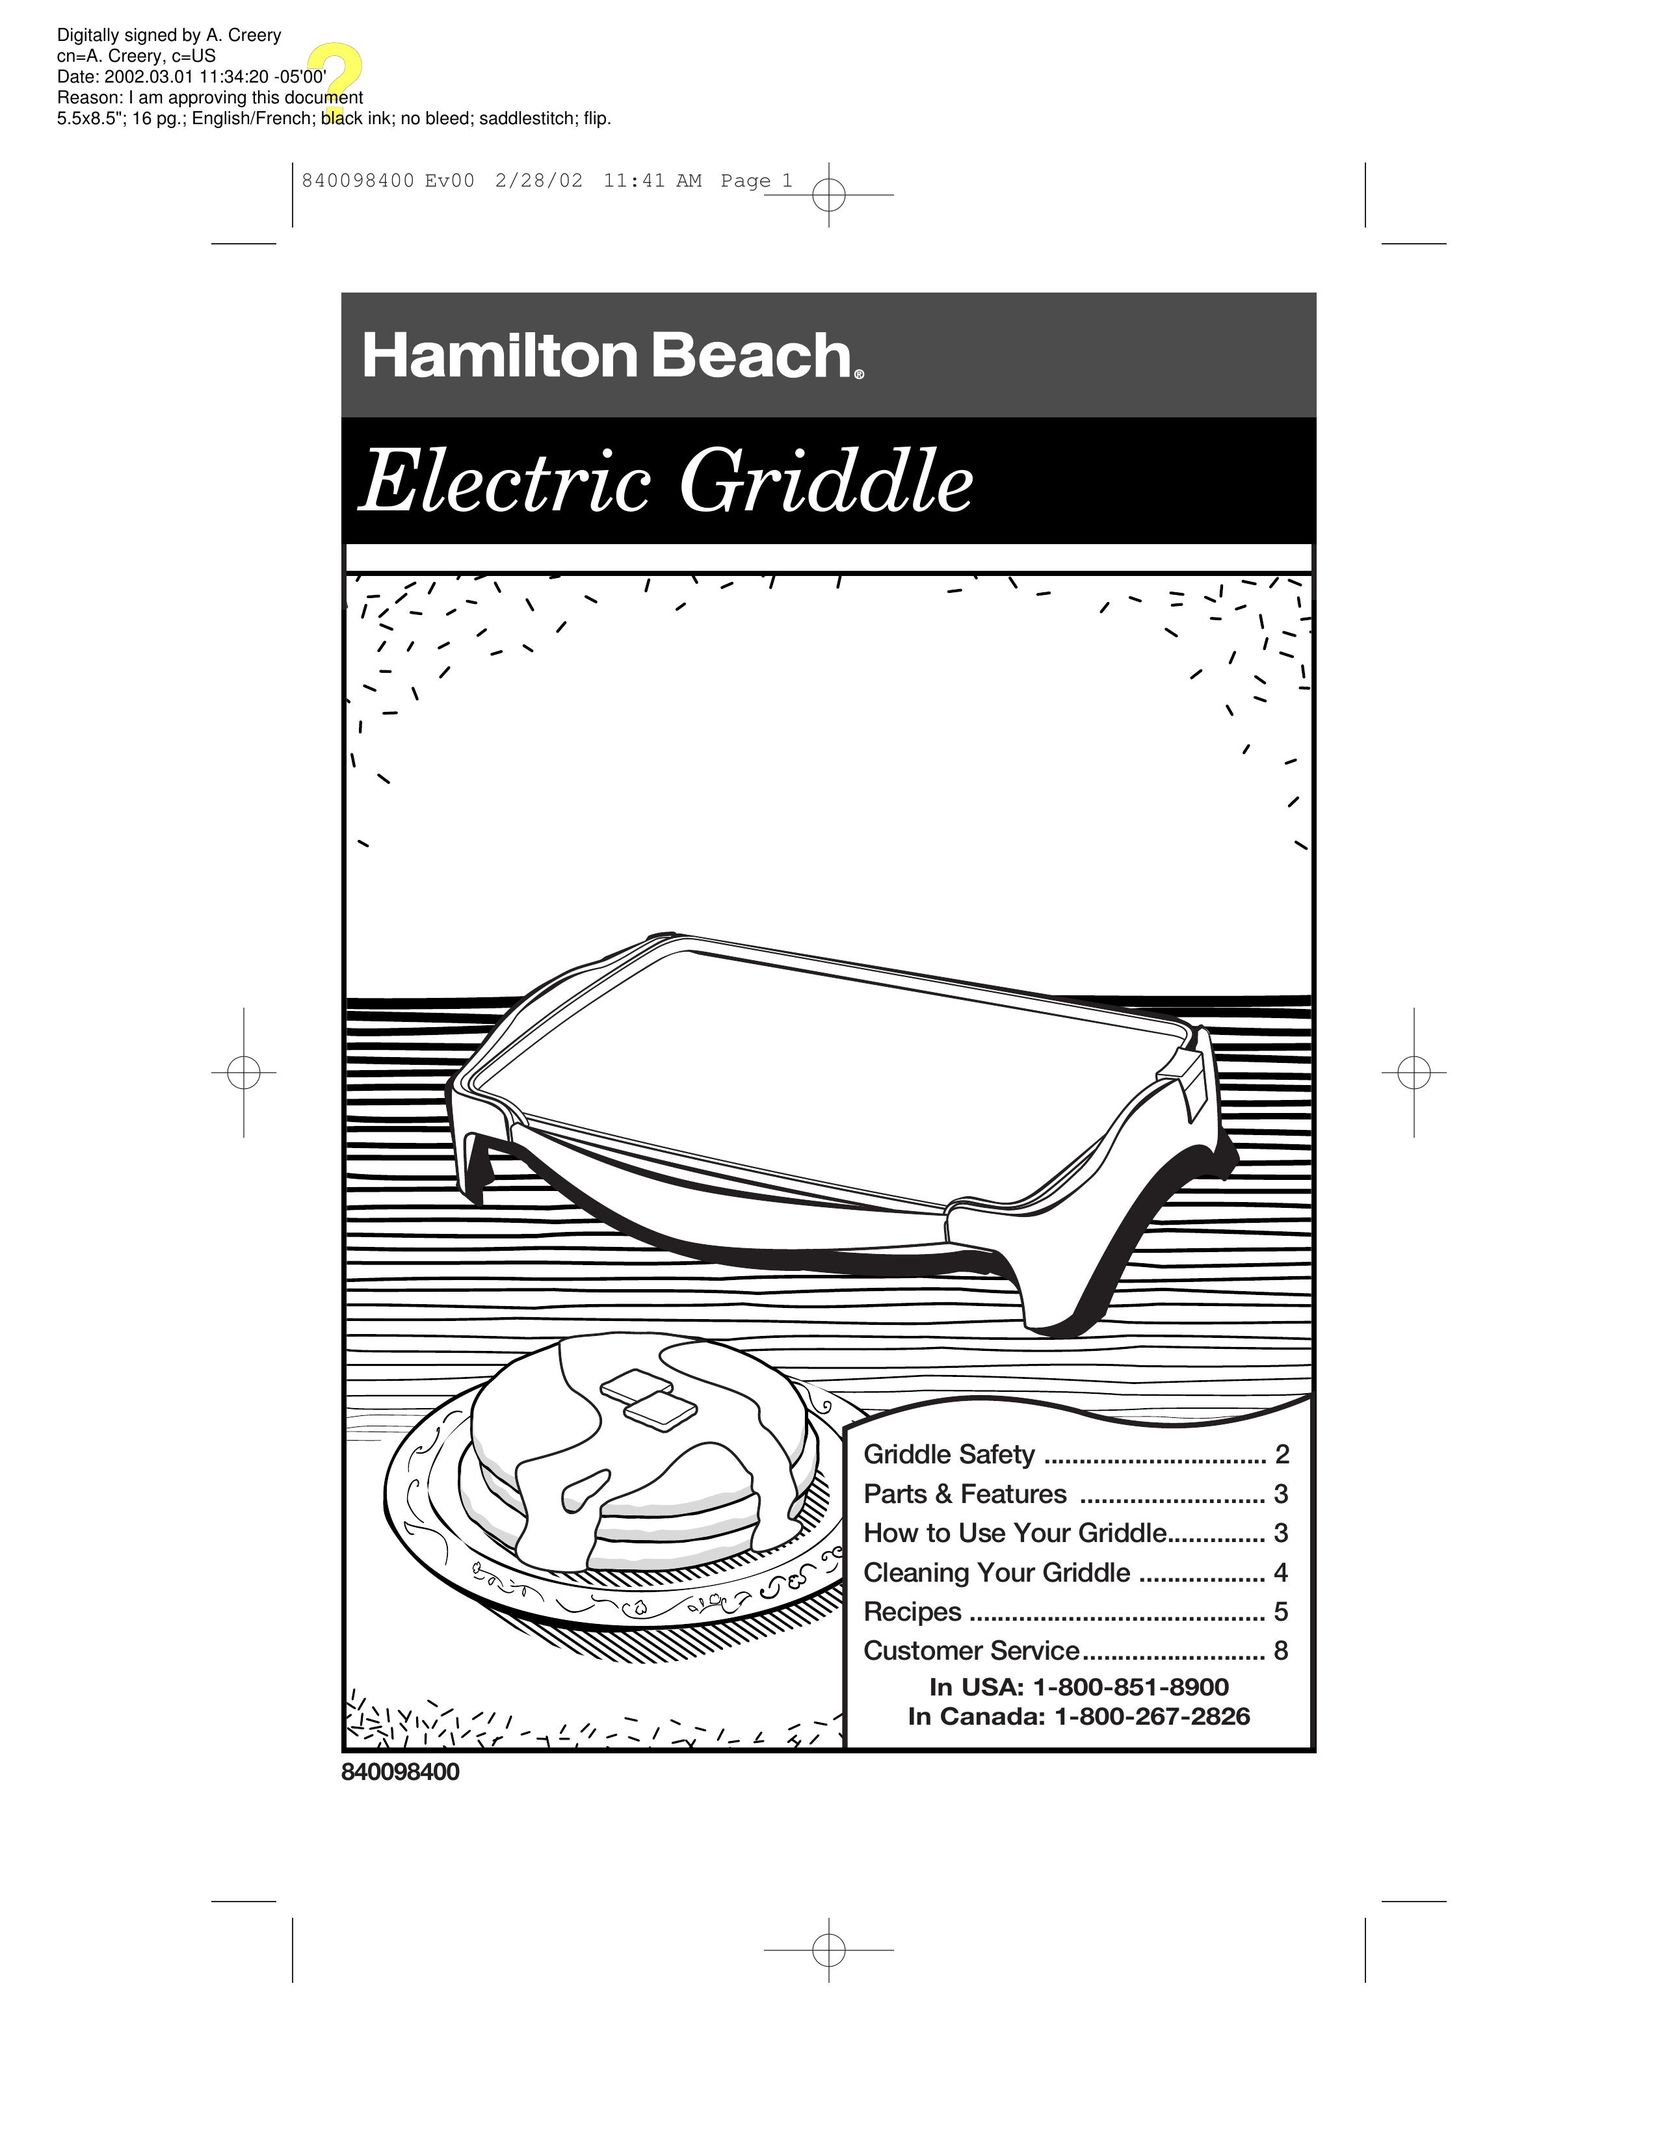 Hamilton Beach Electric Griddle Griddle User Manual